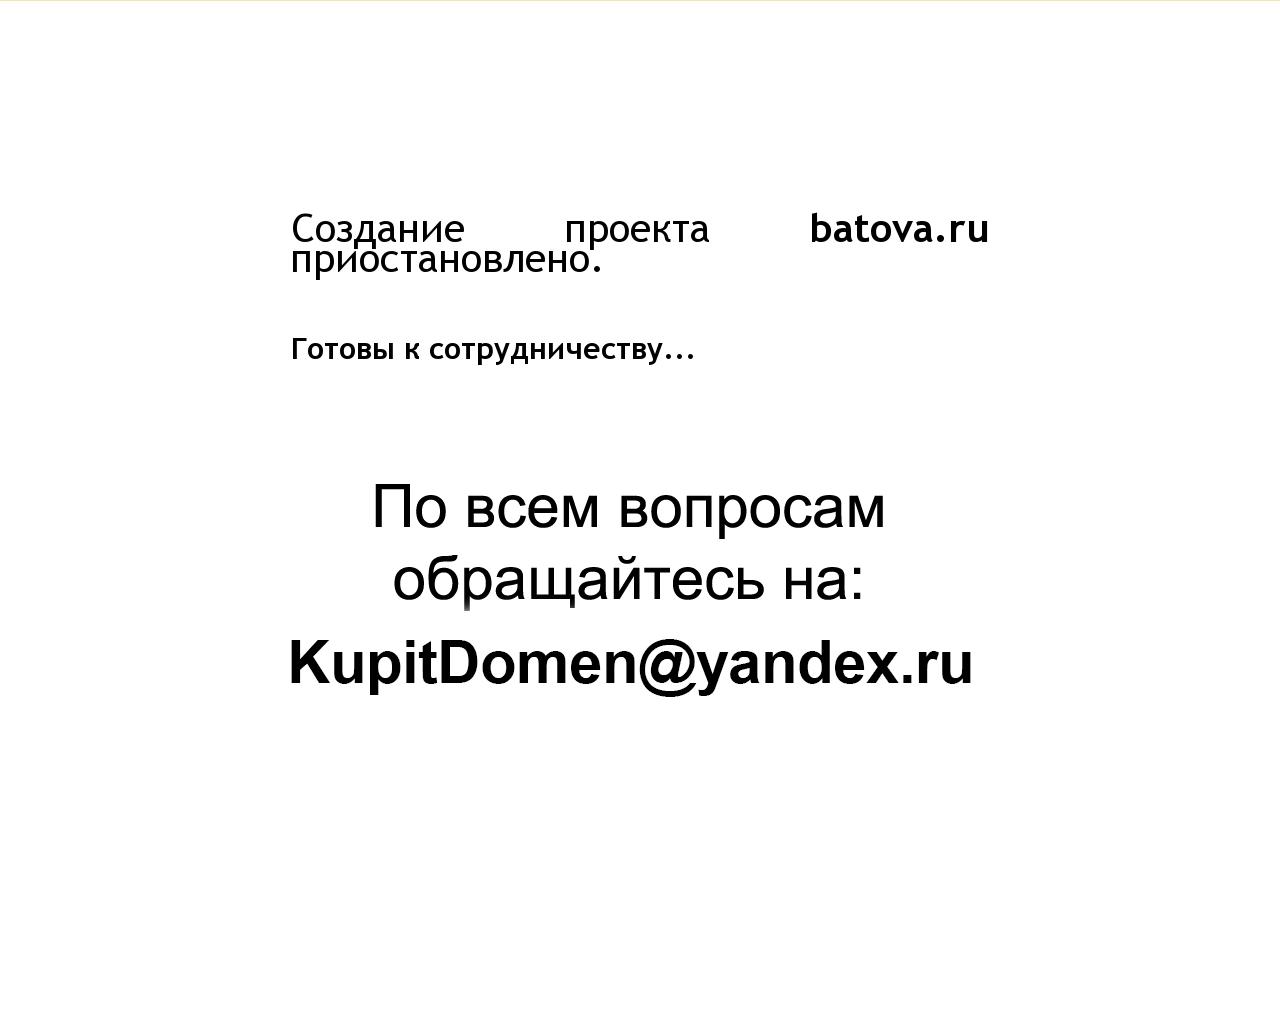 Изображение сайта batova.ru в разрешении 1280x1024